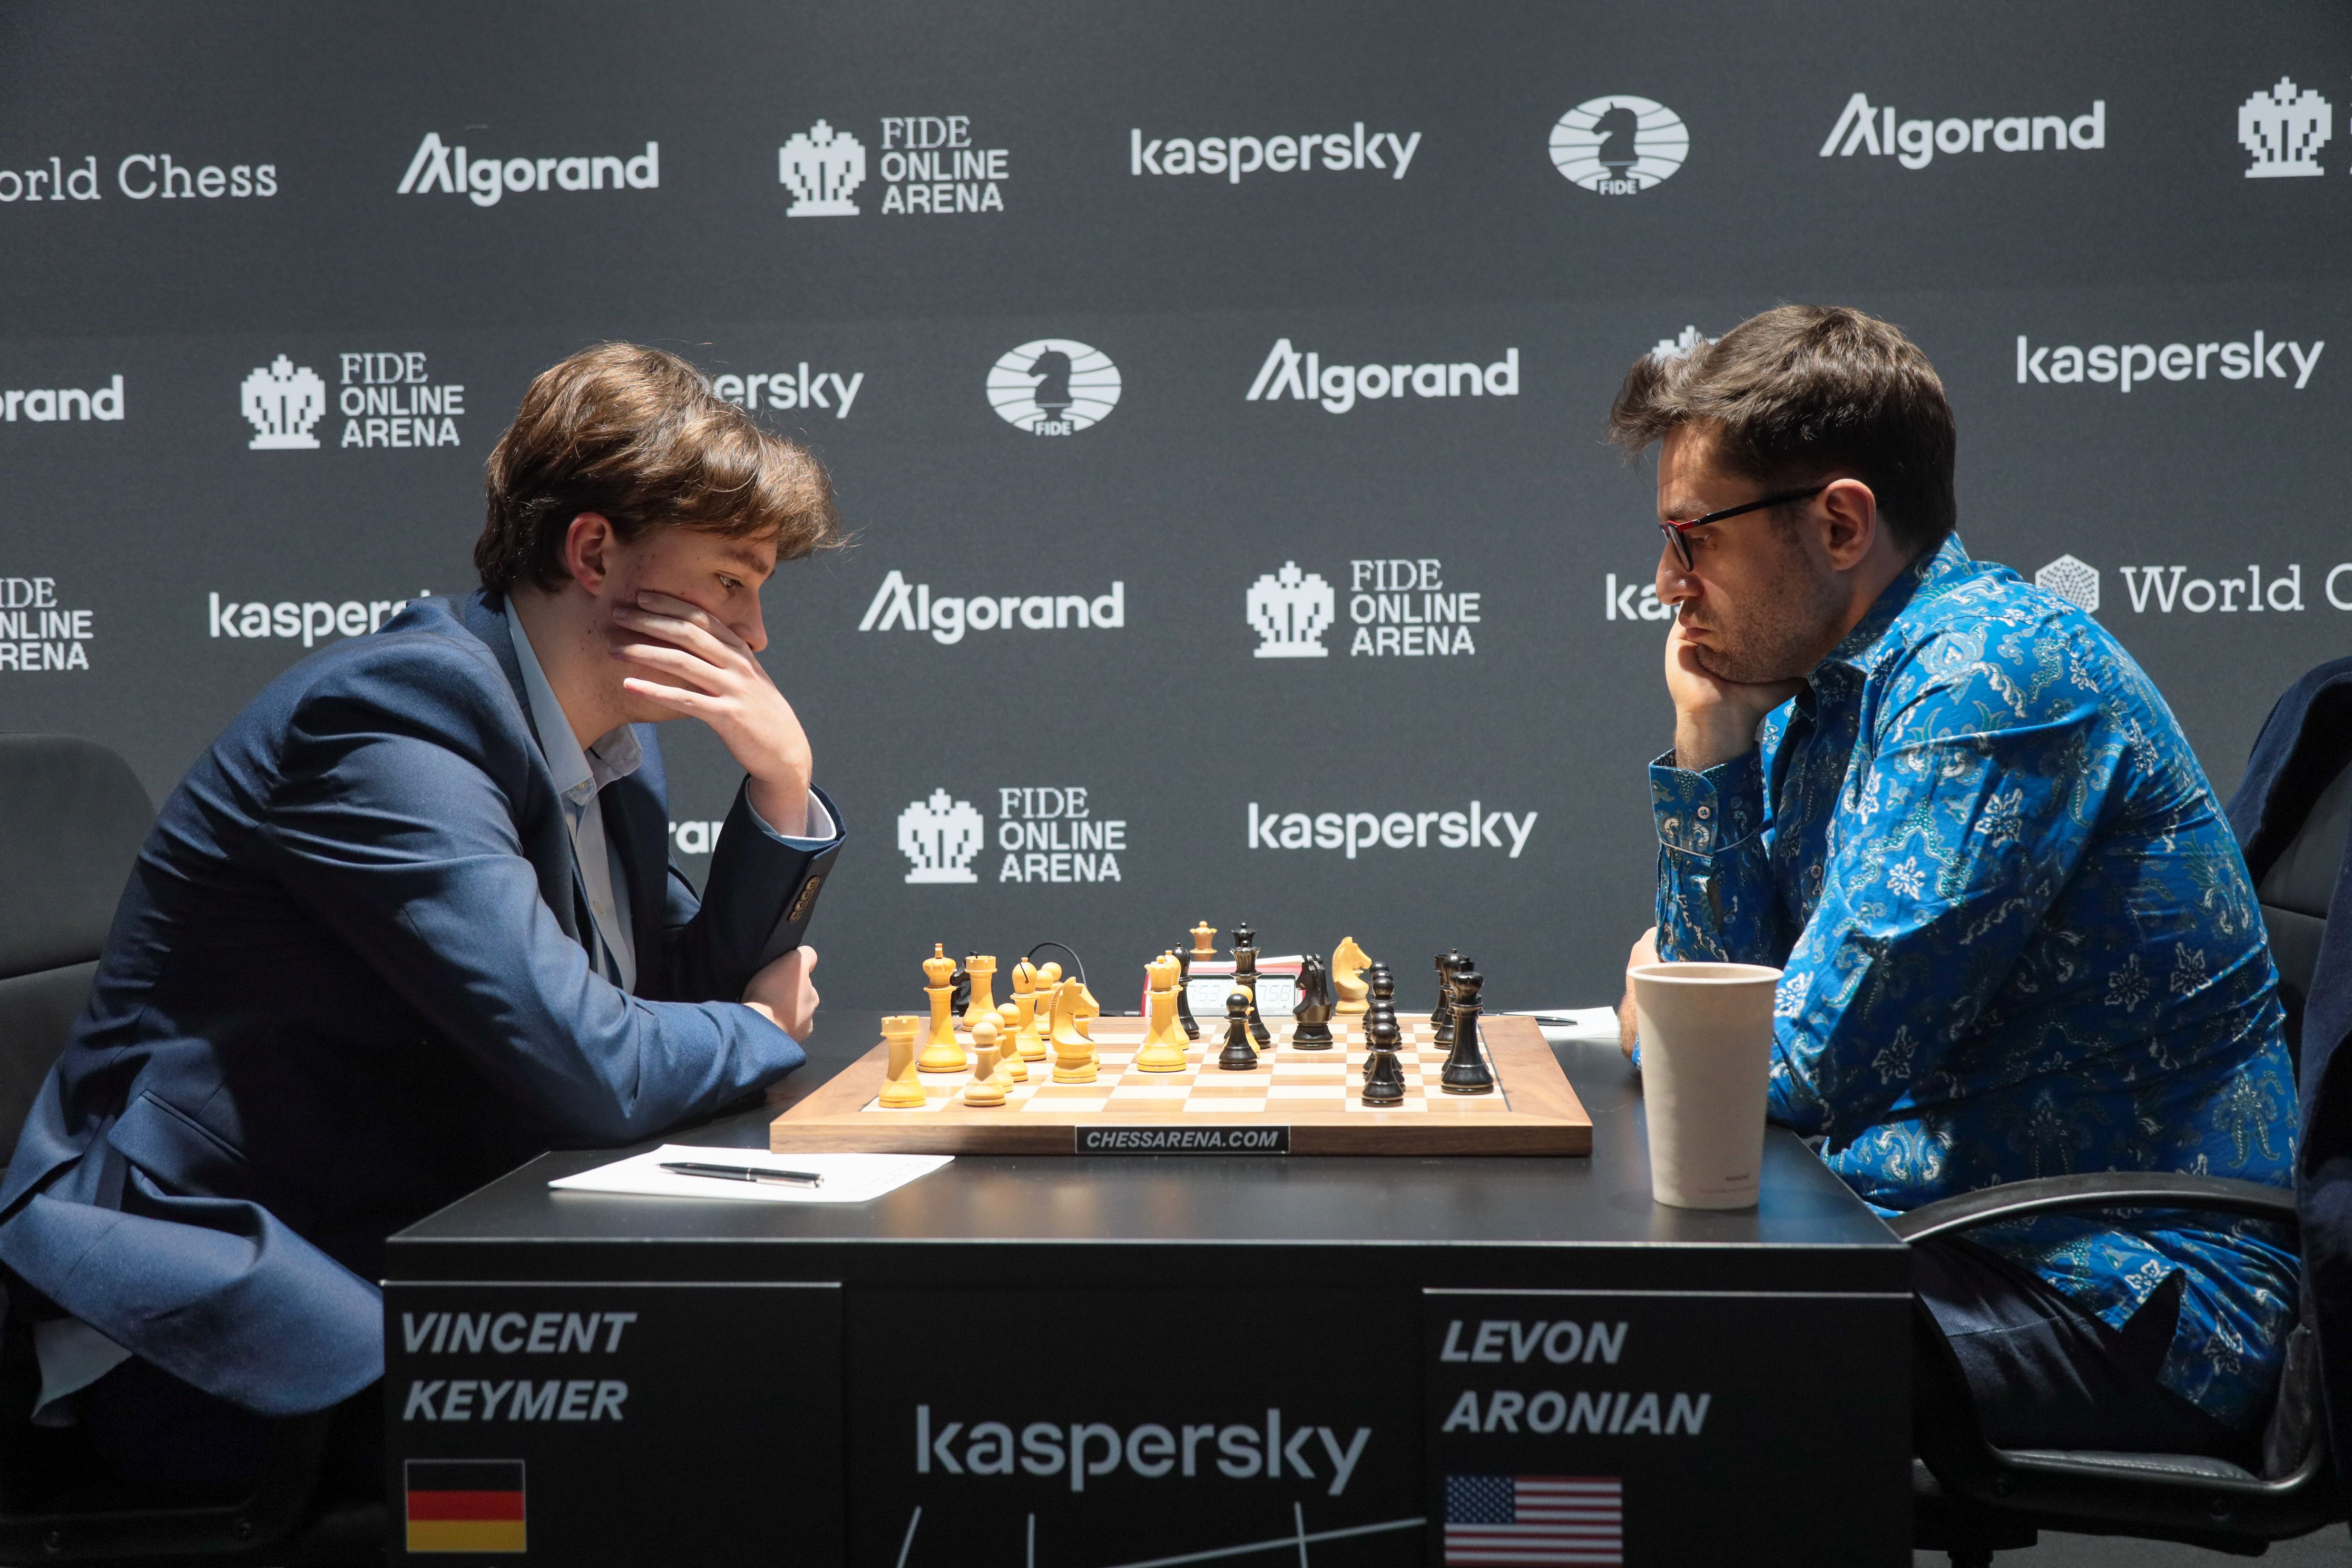 Grand Prix da FIDE - Rodada 1: Wojtaszek, Fedoseev e Aronian venceram 